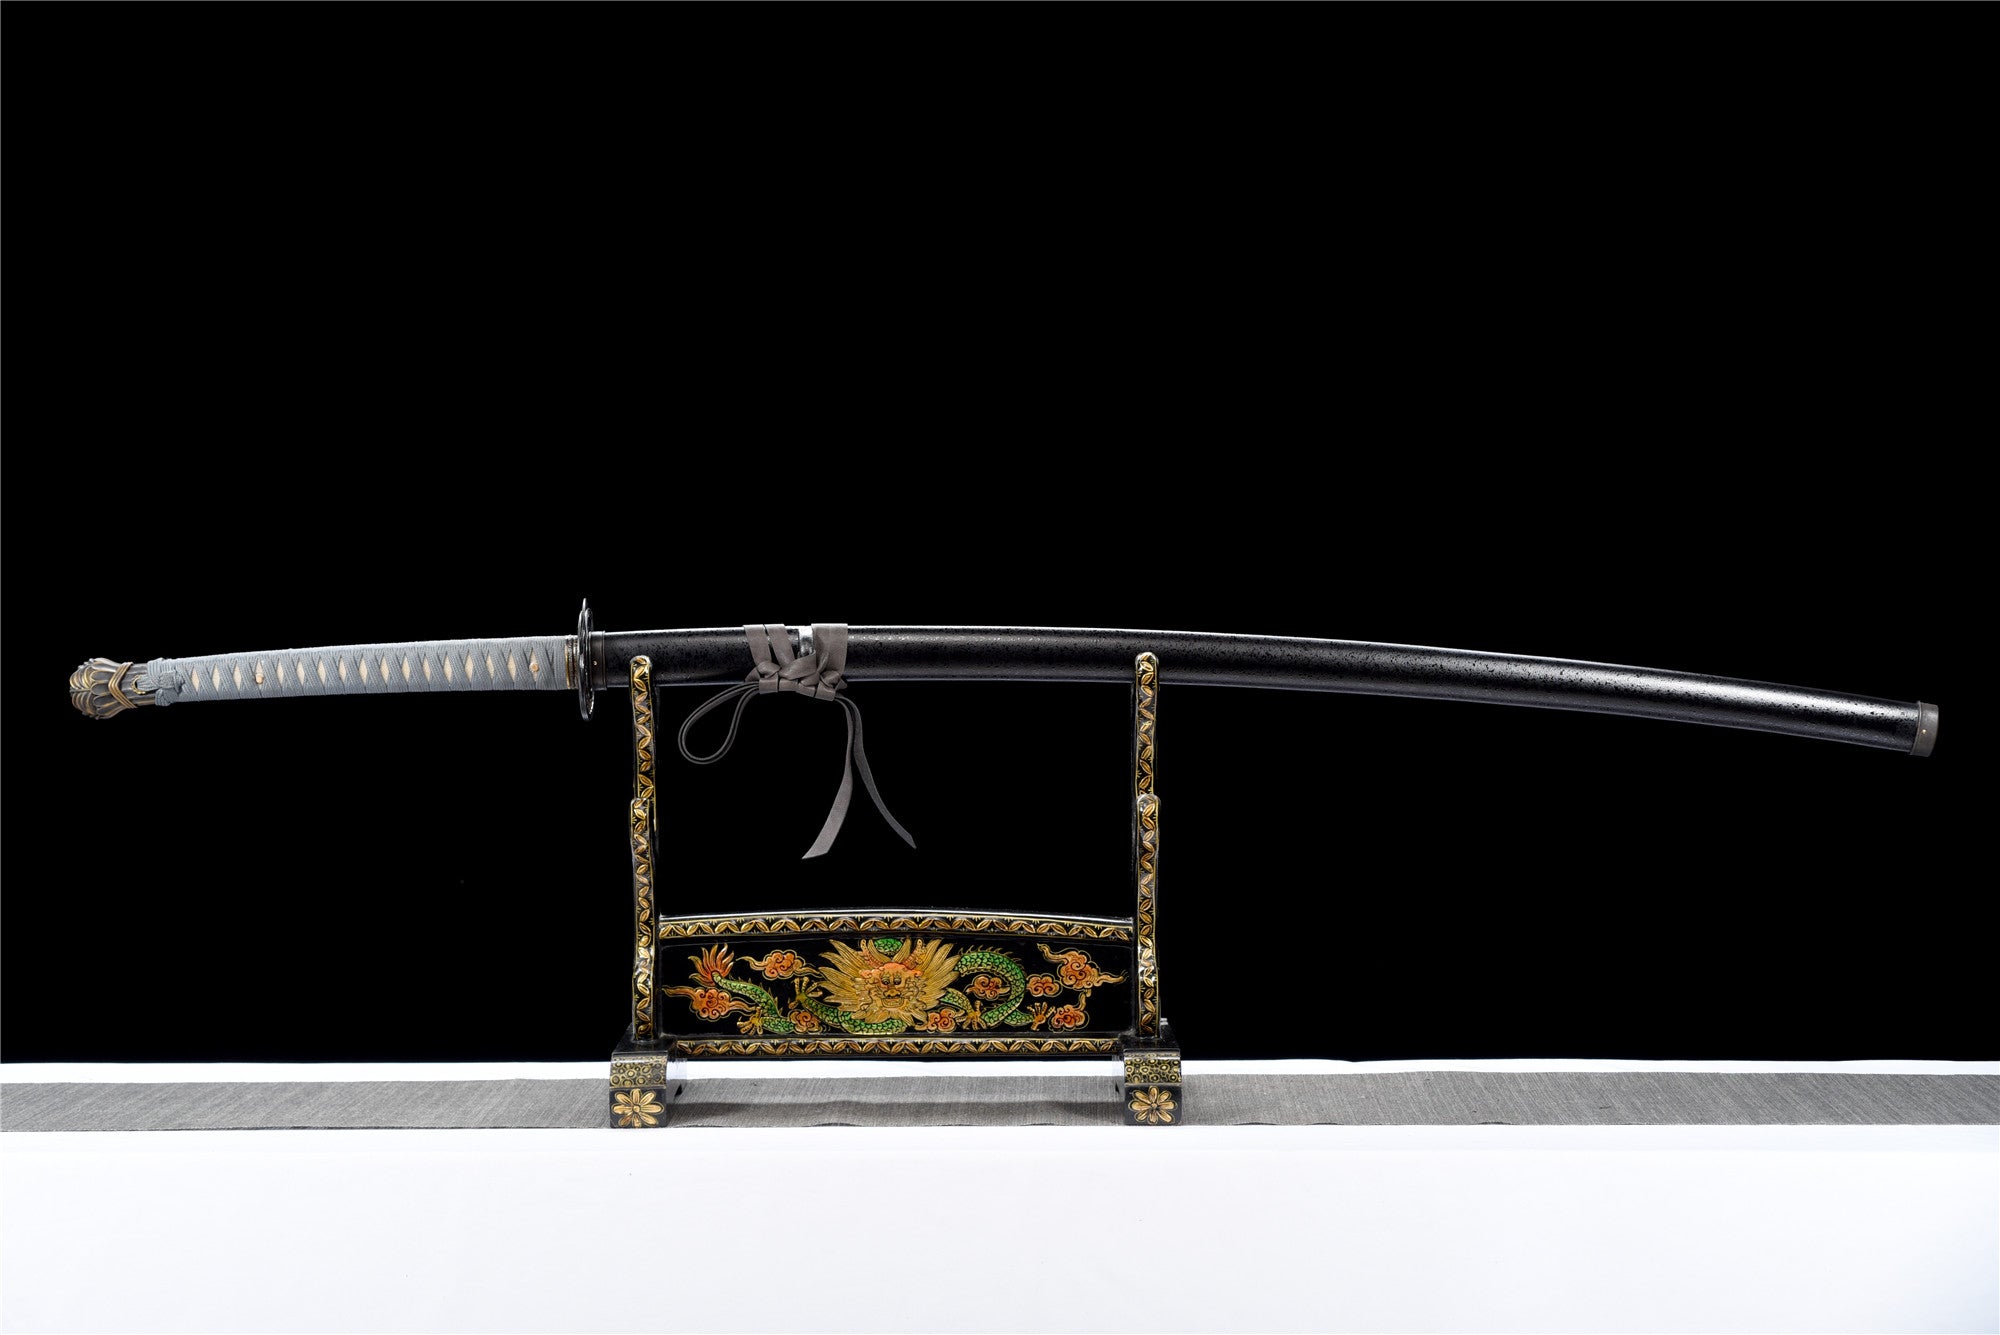 Elden Ring Moonveil Katana Sword,Real Handmade Japanese Samurai Sword,Damascus Steel,Full Tang